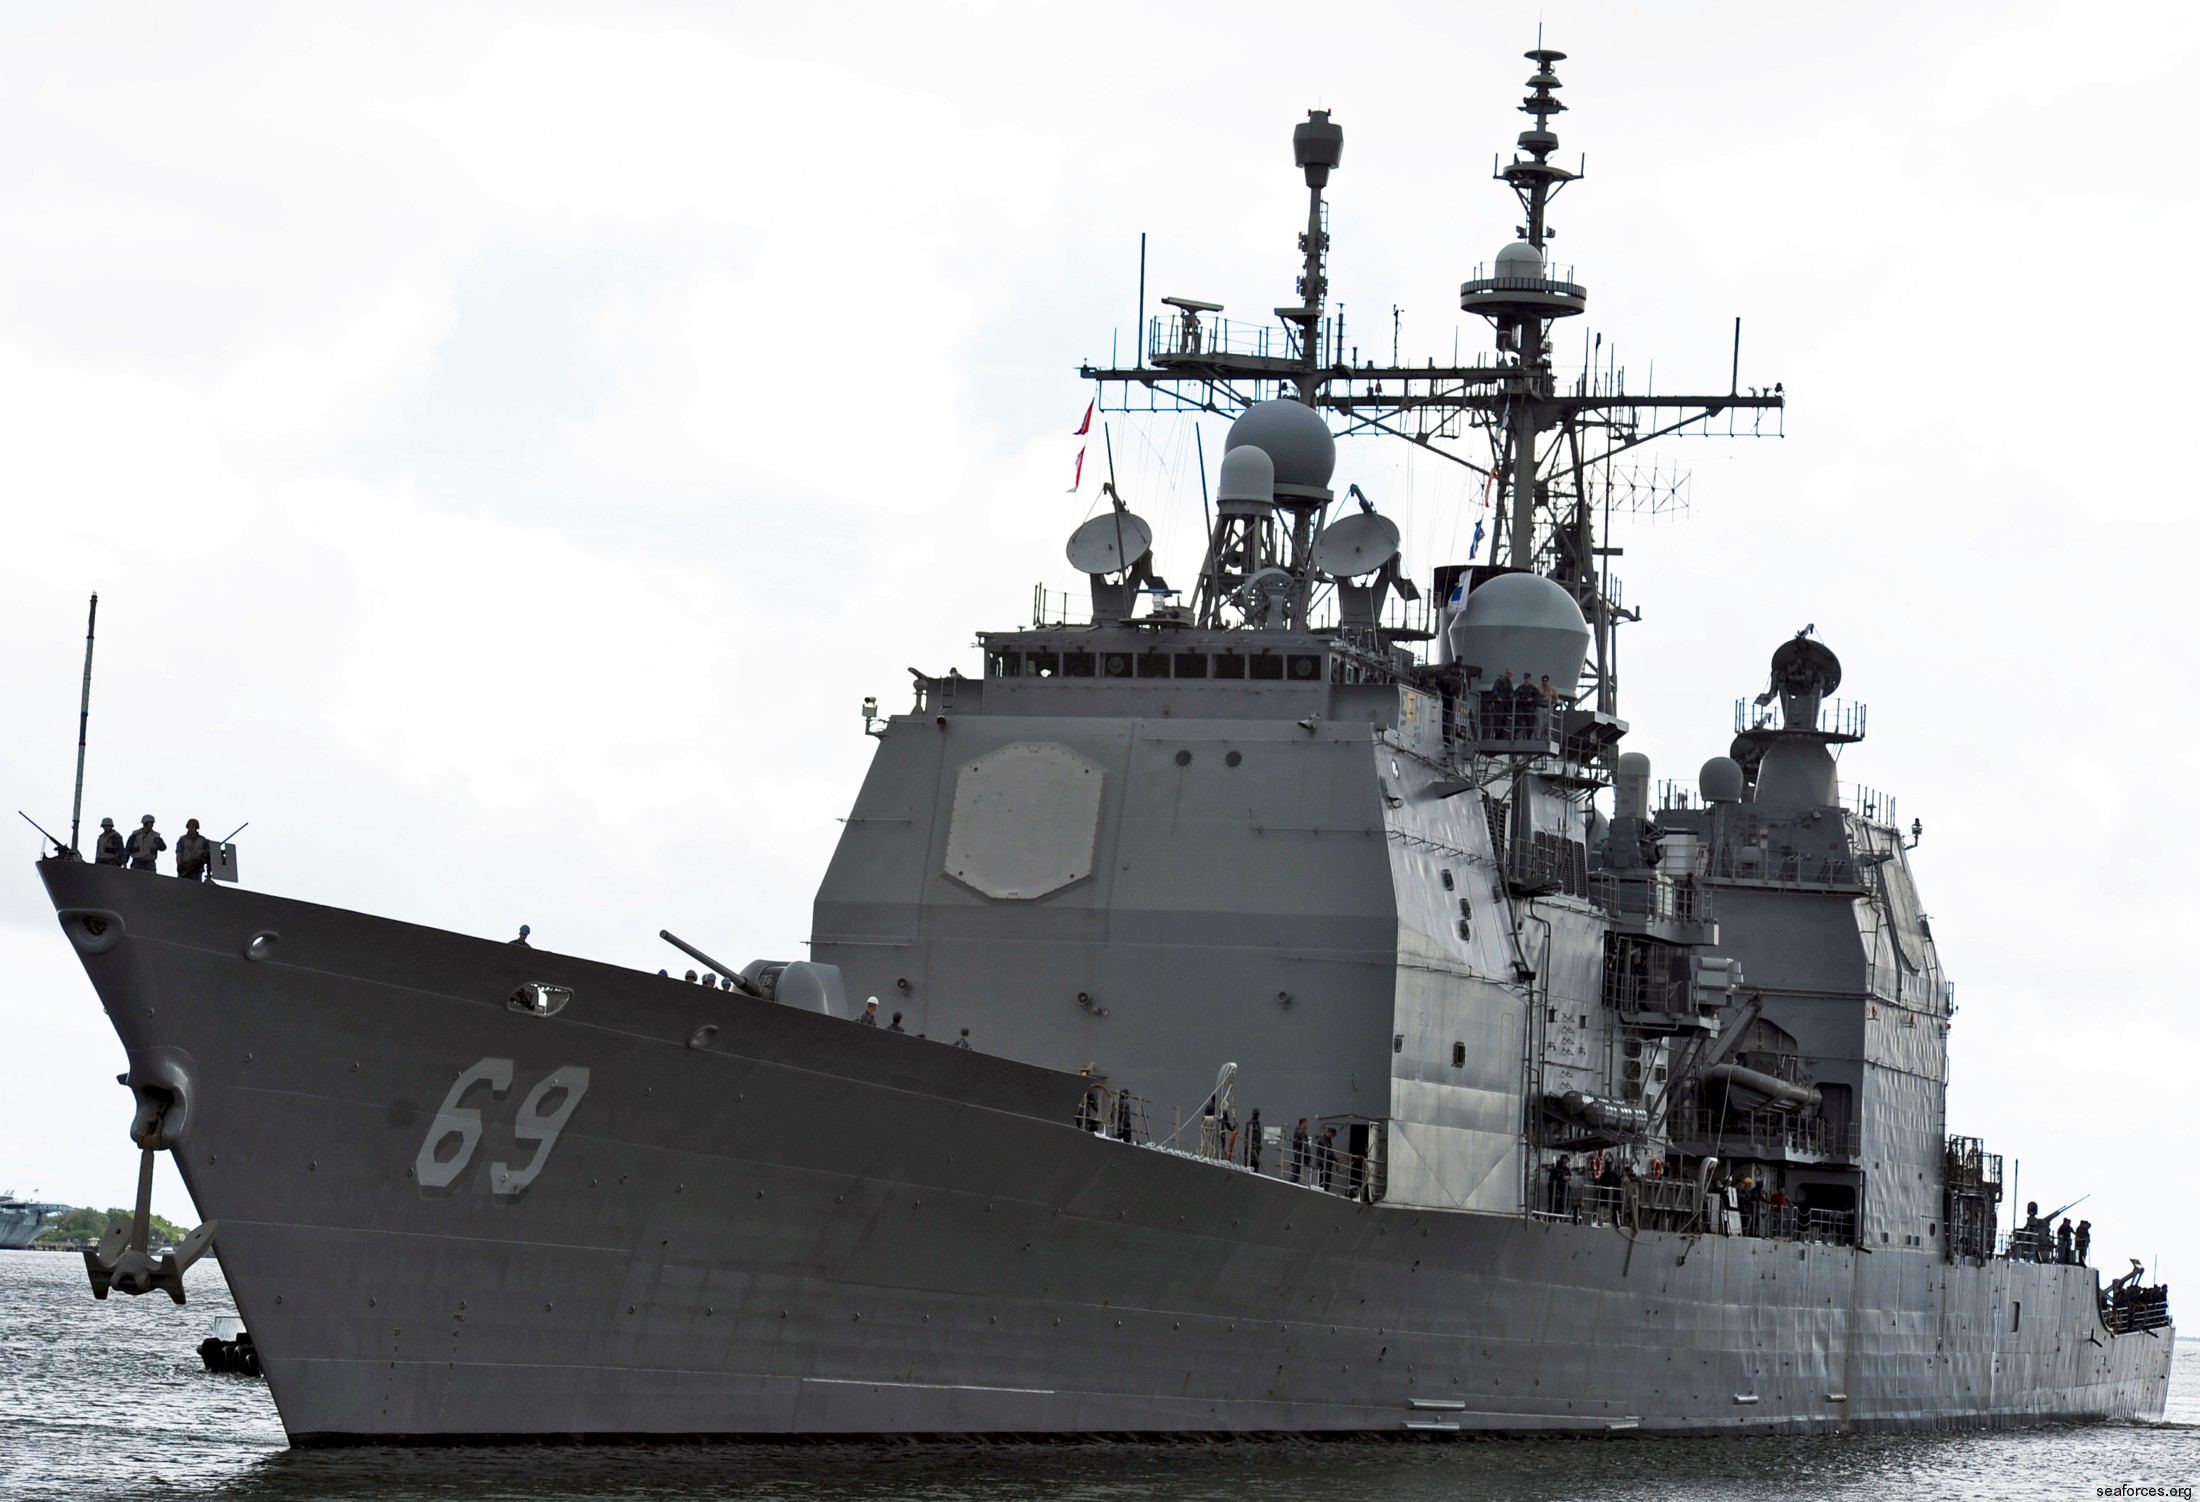 cg-69 uss vicksburg ticonderoga class guided missile cruiser us navy 50 charleston south carolina